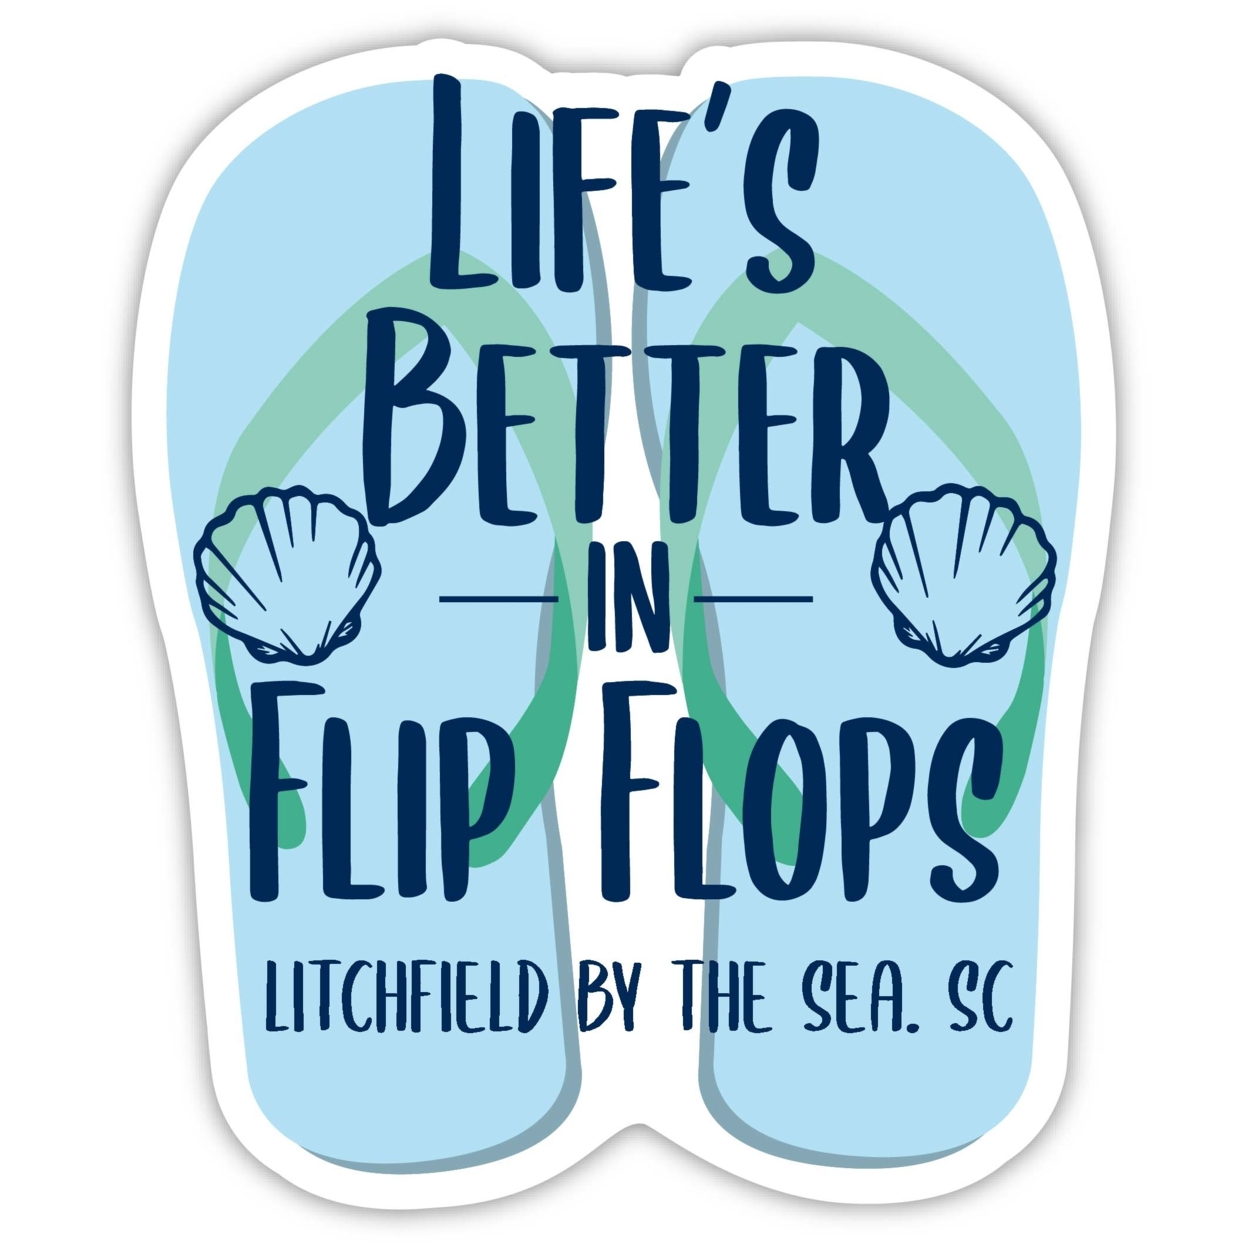 Litchfield By The Sea South Carolina Souvenir 4 Inch Vinyl Decal Sticker Flip Flop Design